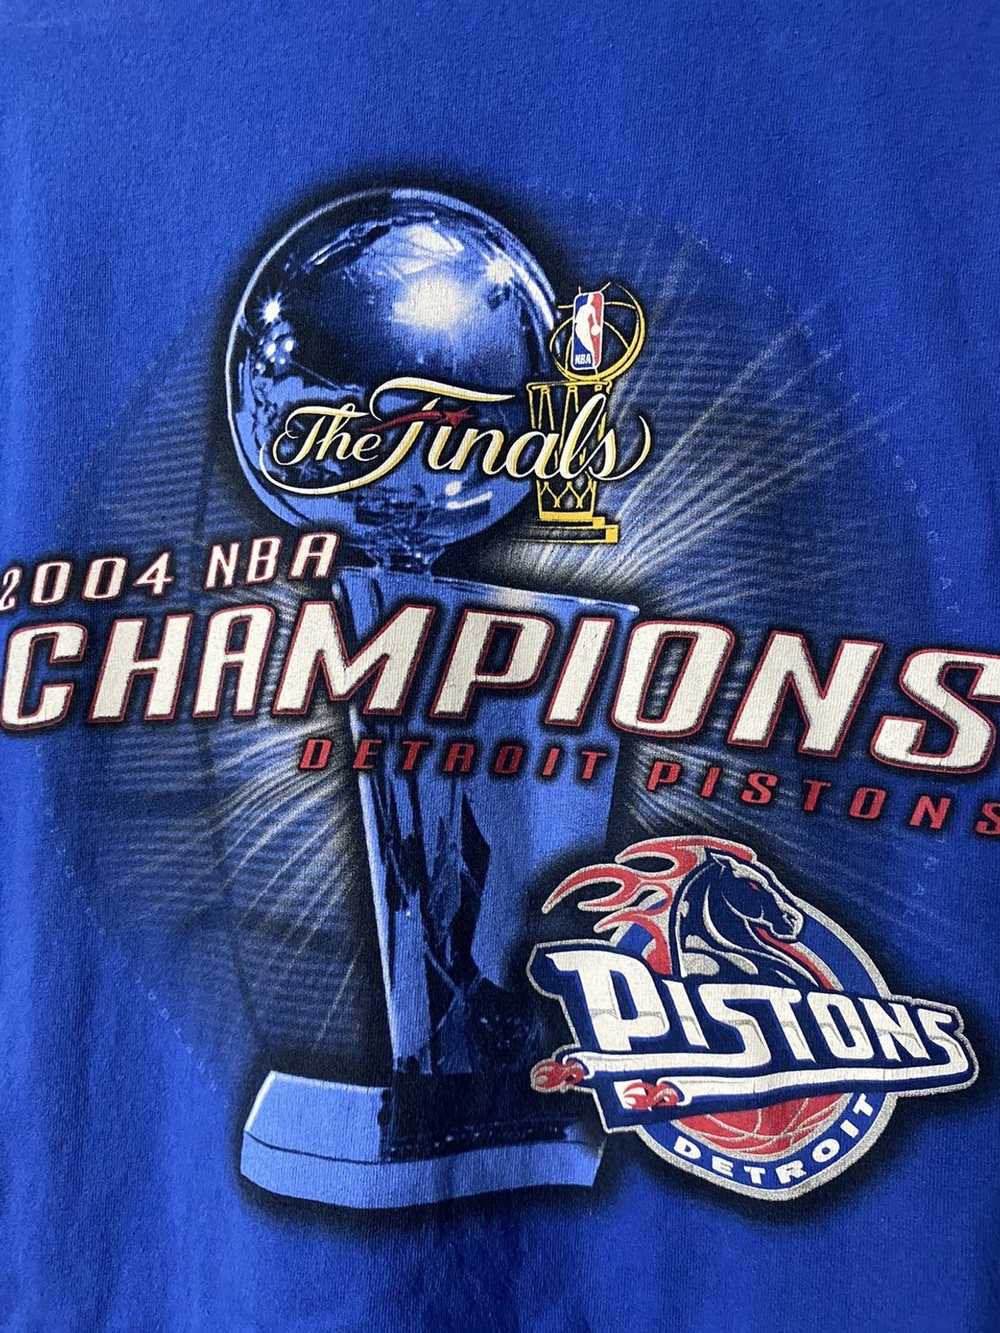 Vintage 2004 NBA Champions Detroit Pistons - XL - image 3